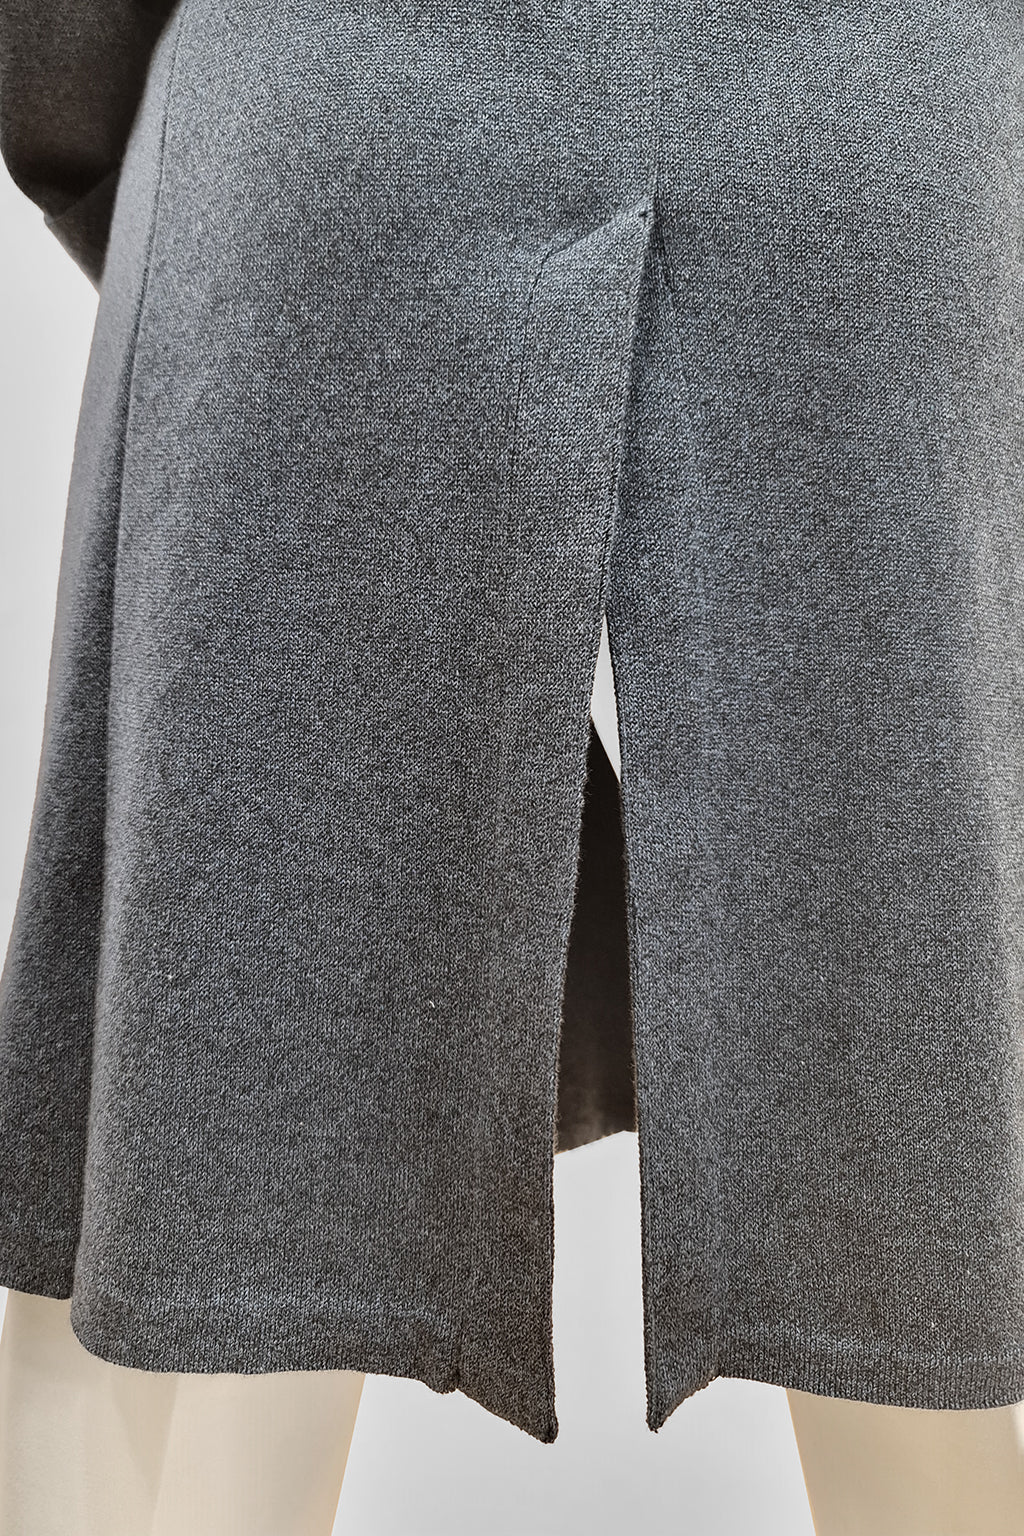 Grey knit skirt with back slit detail